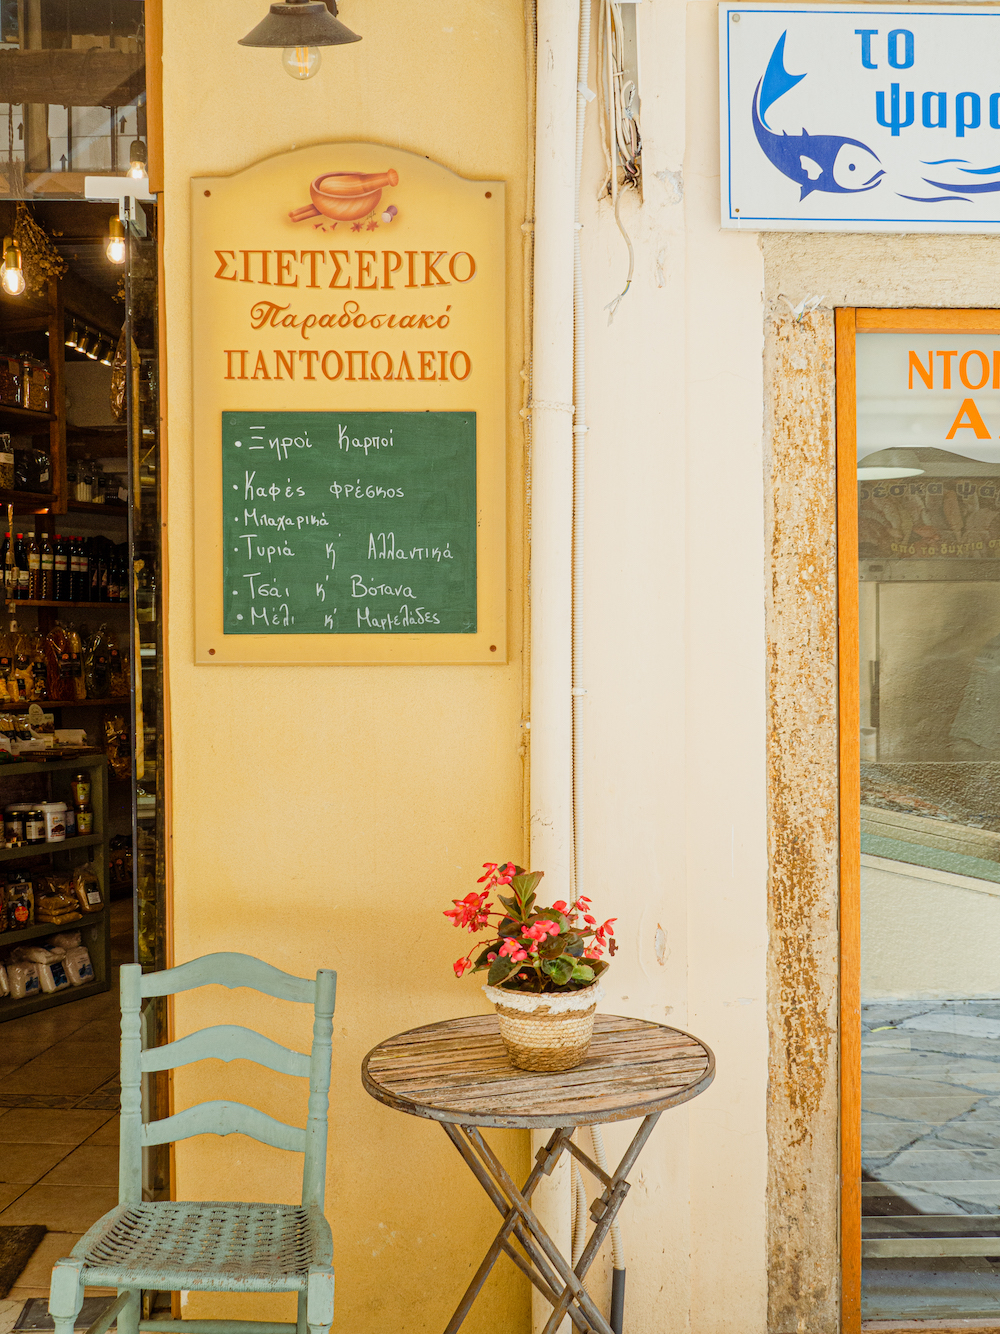 Ontdek historisch Corfu stad Corfu tips